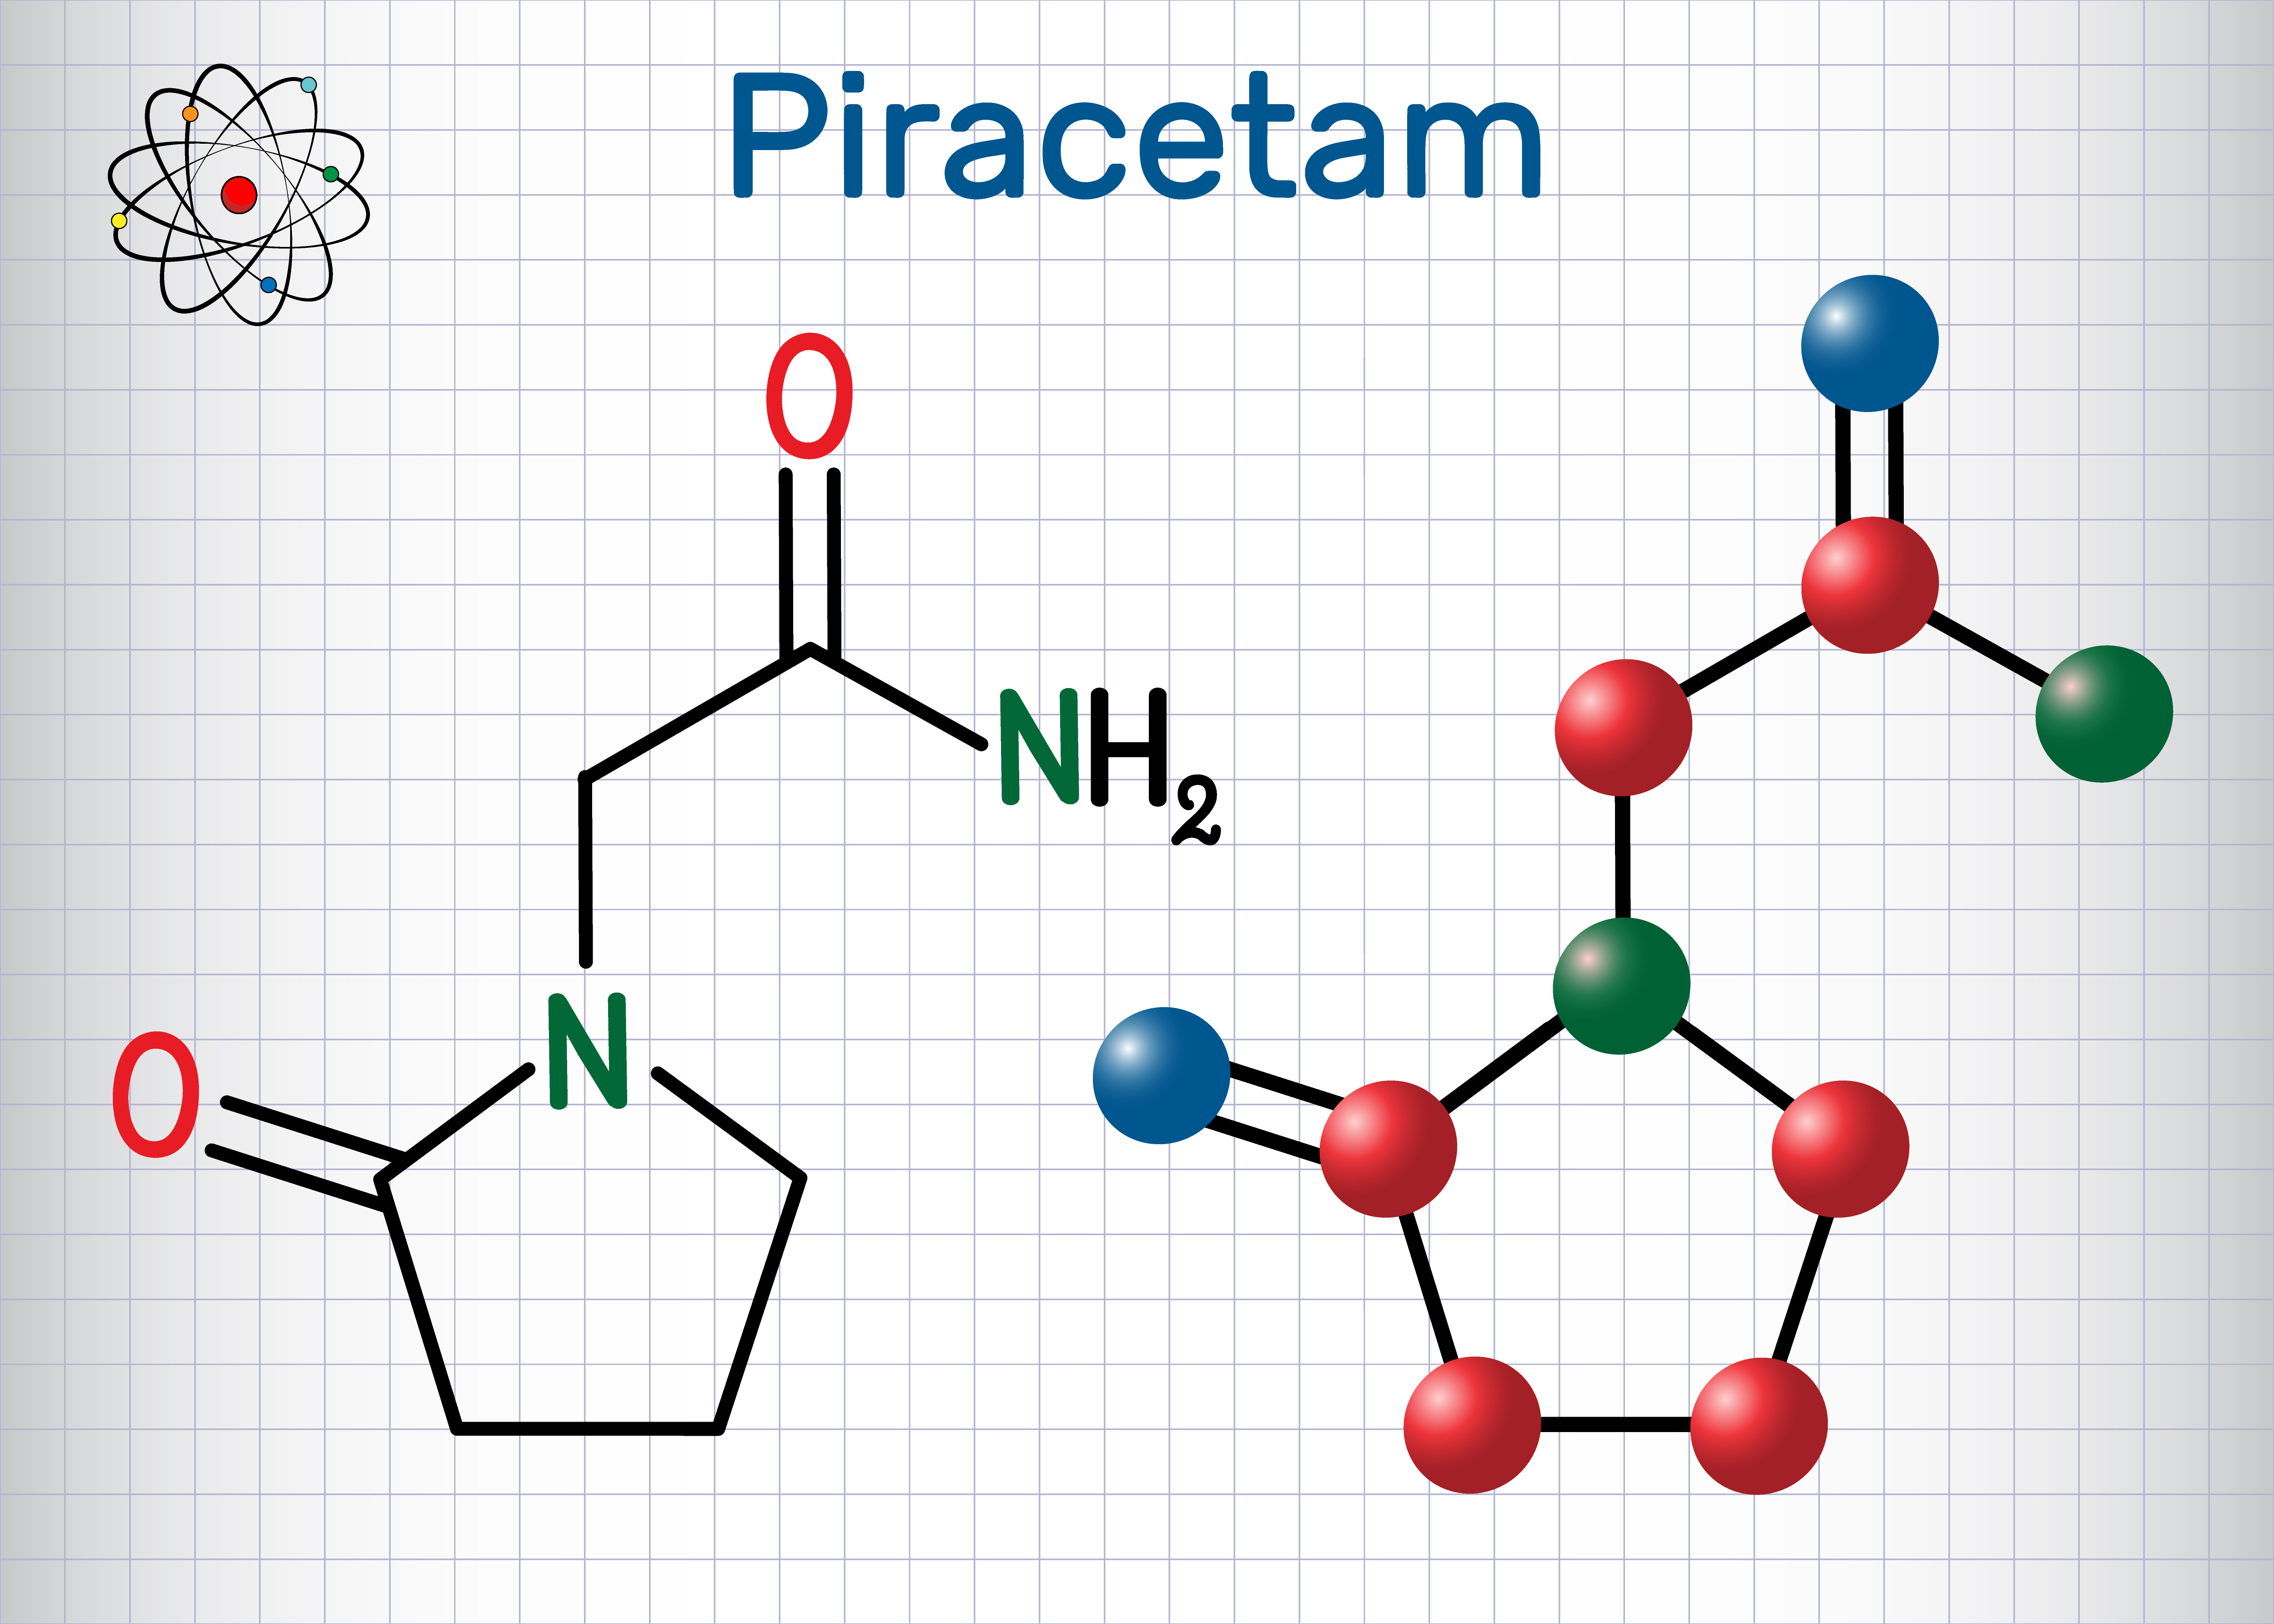 Piracetam - the most popular nootropic drug.